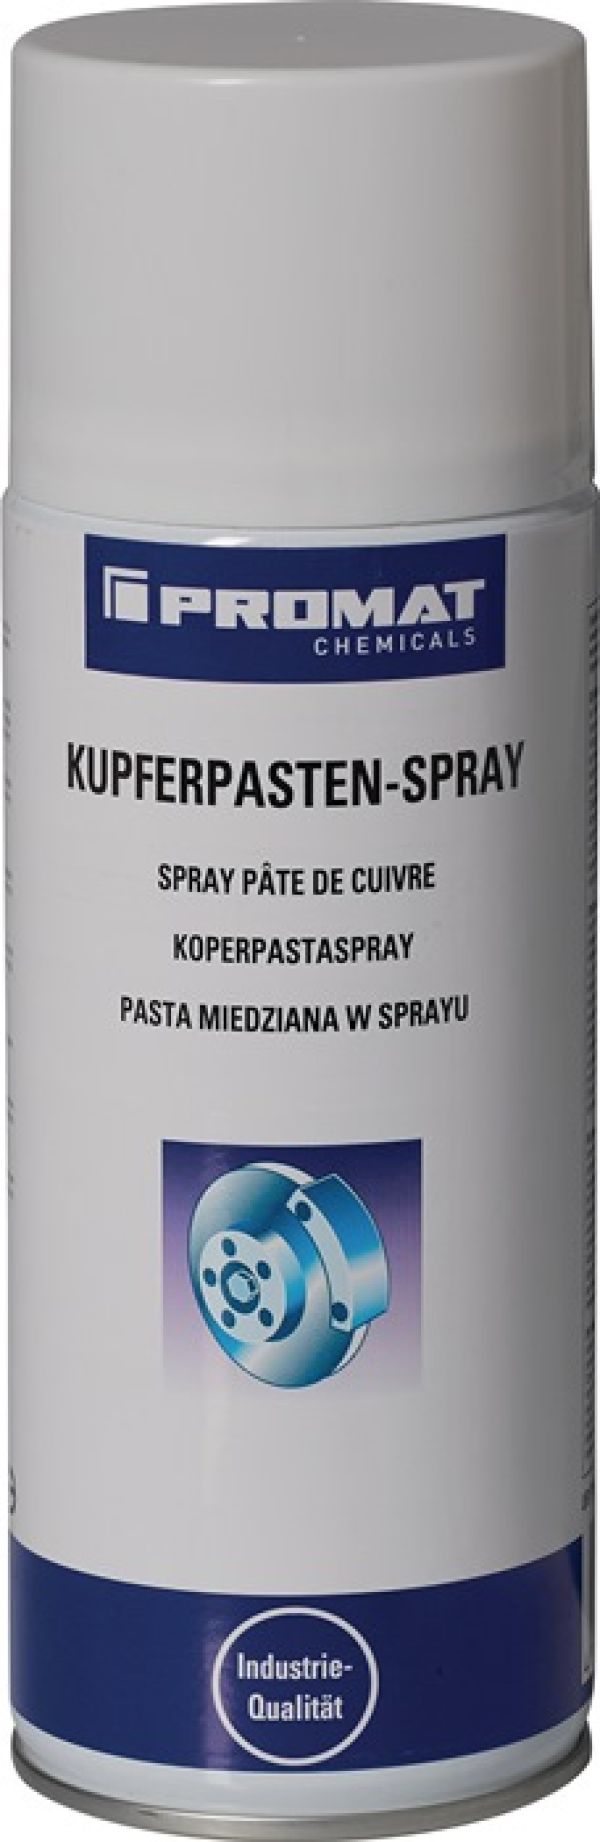 Kupferpastenspray 400 ml Spraydose PROMAT CHEMICALS